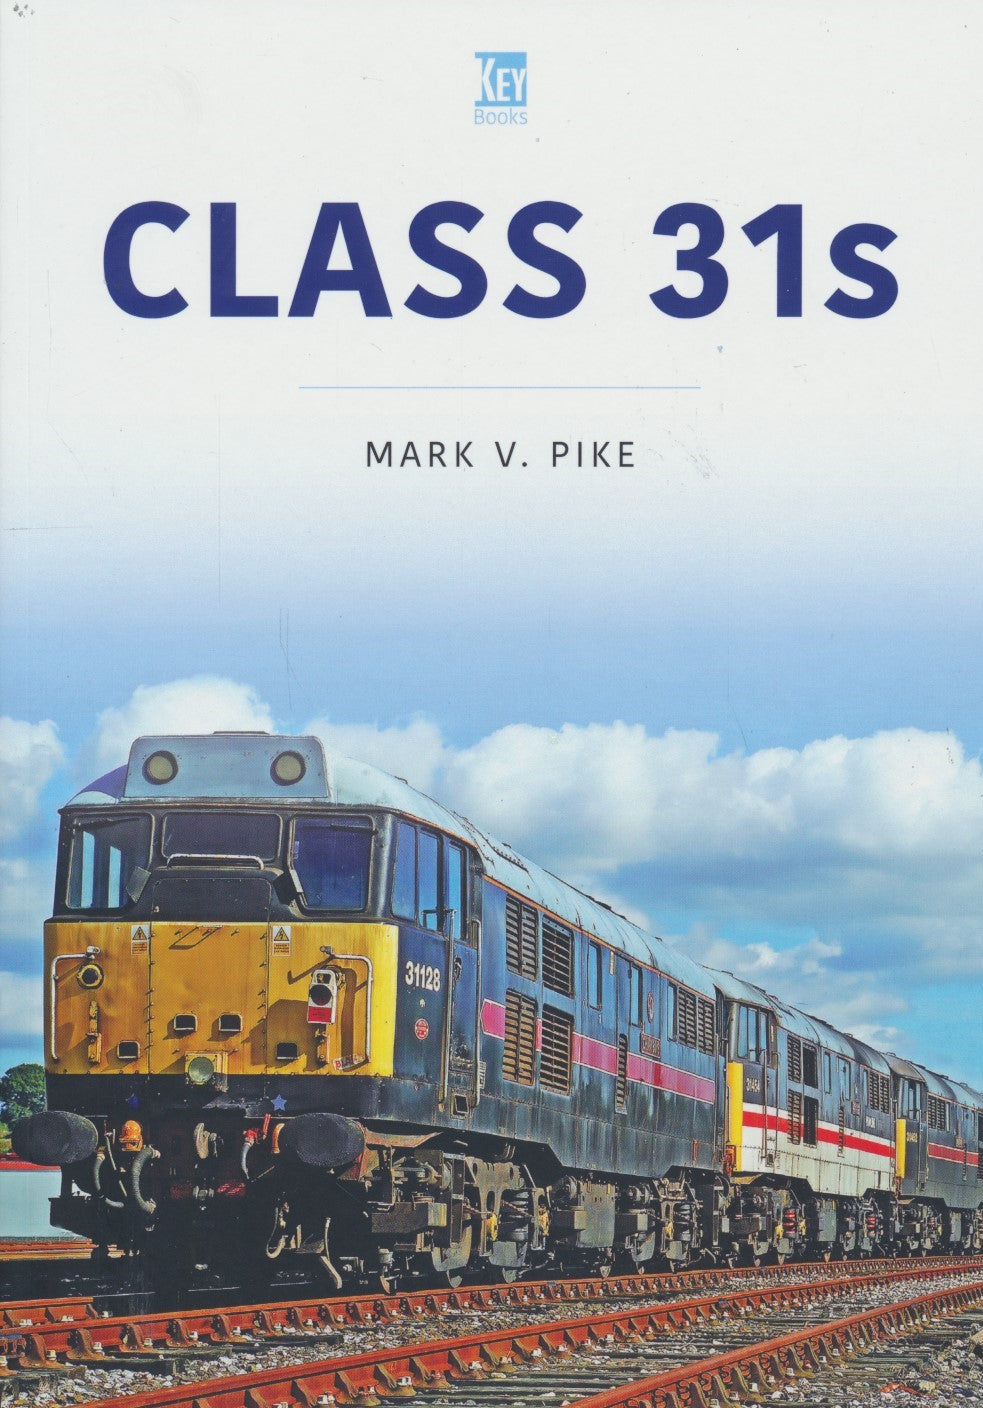 Britain's Railways Series, Volume 50 - Class 31s